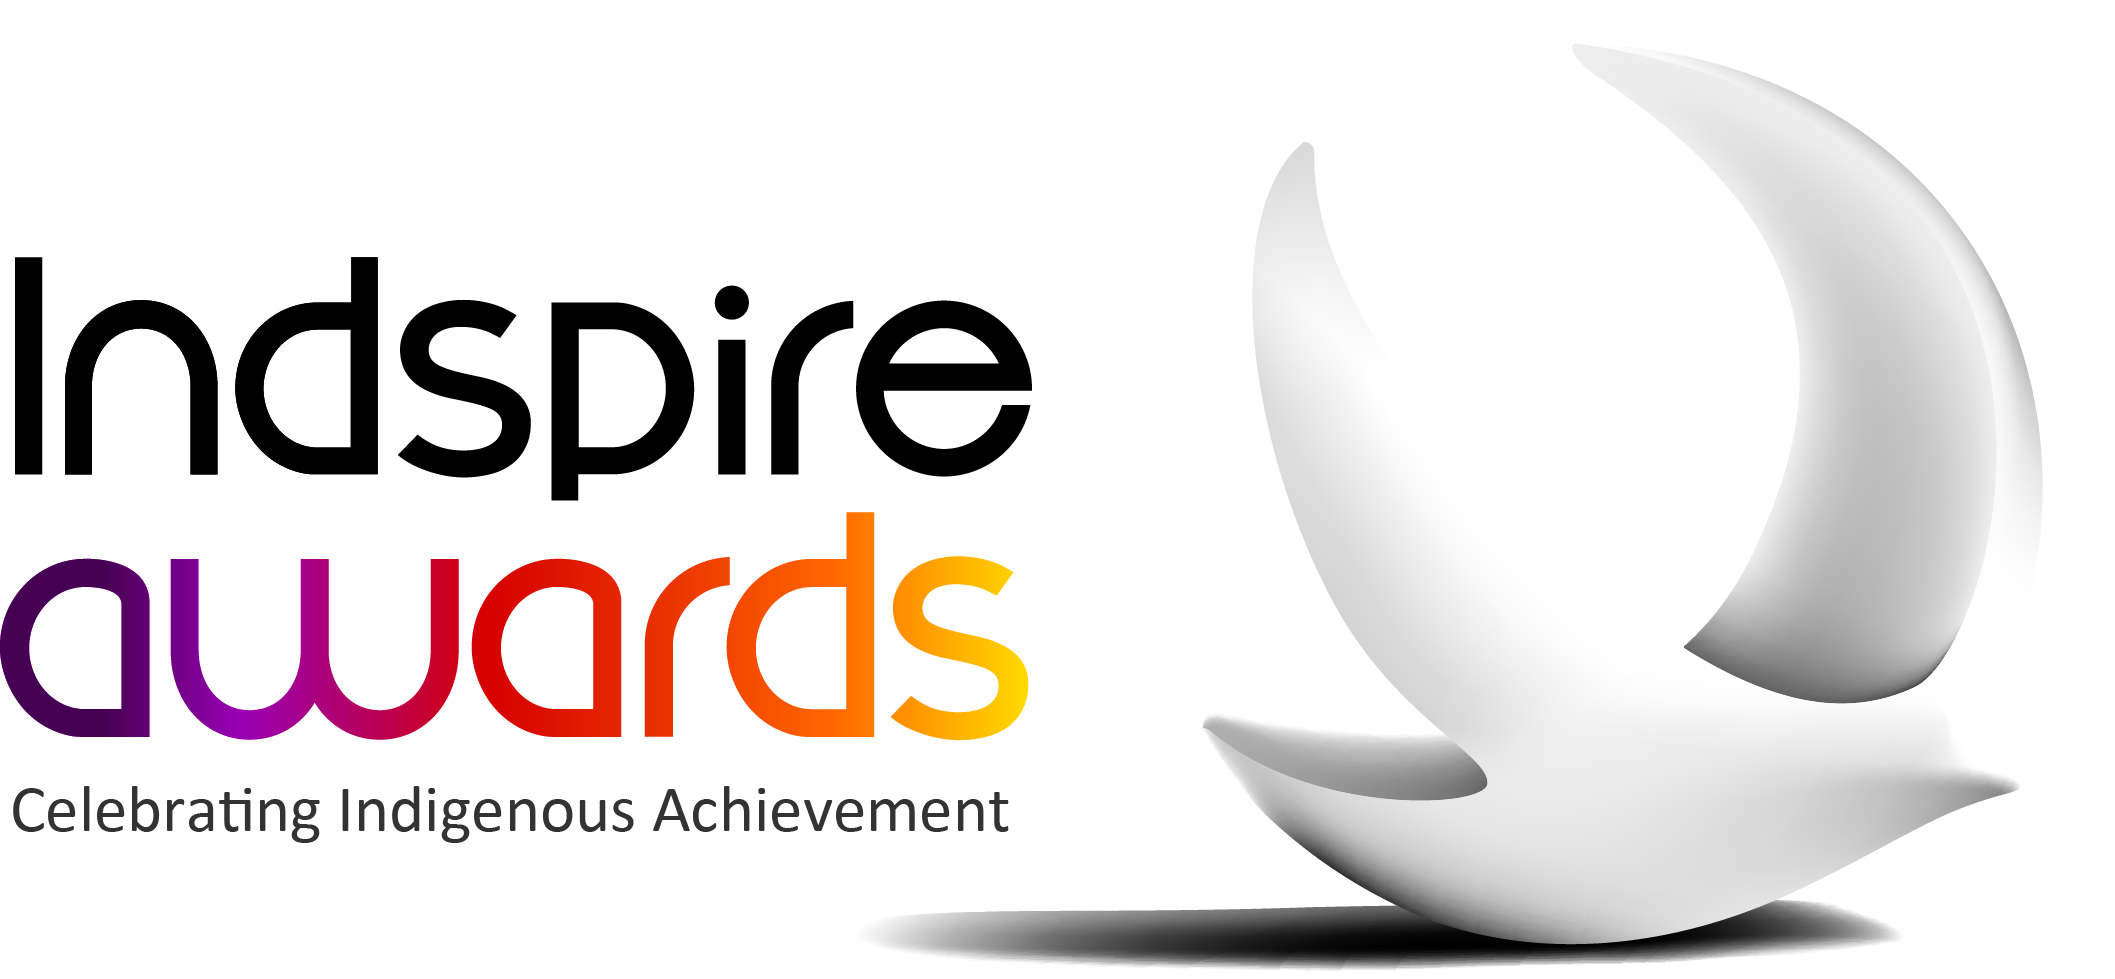 indspire-awards.jpg